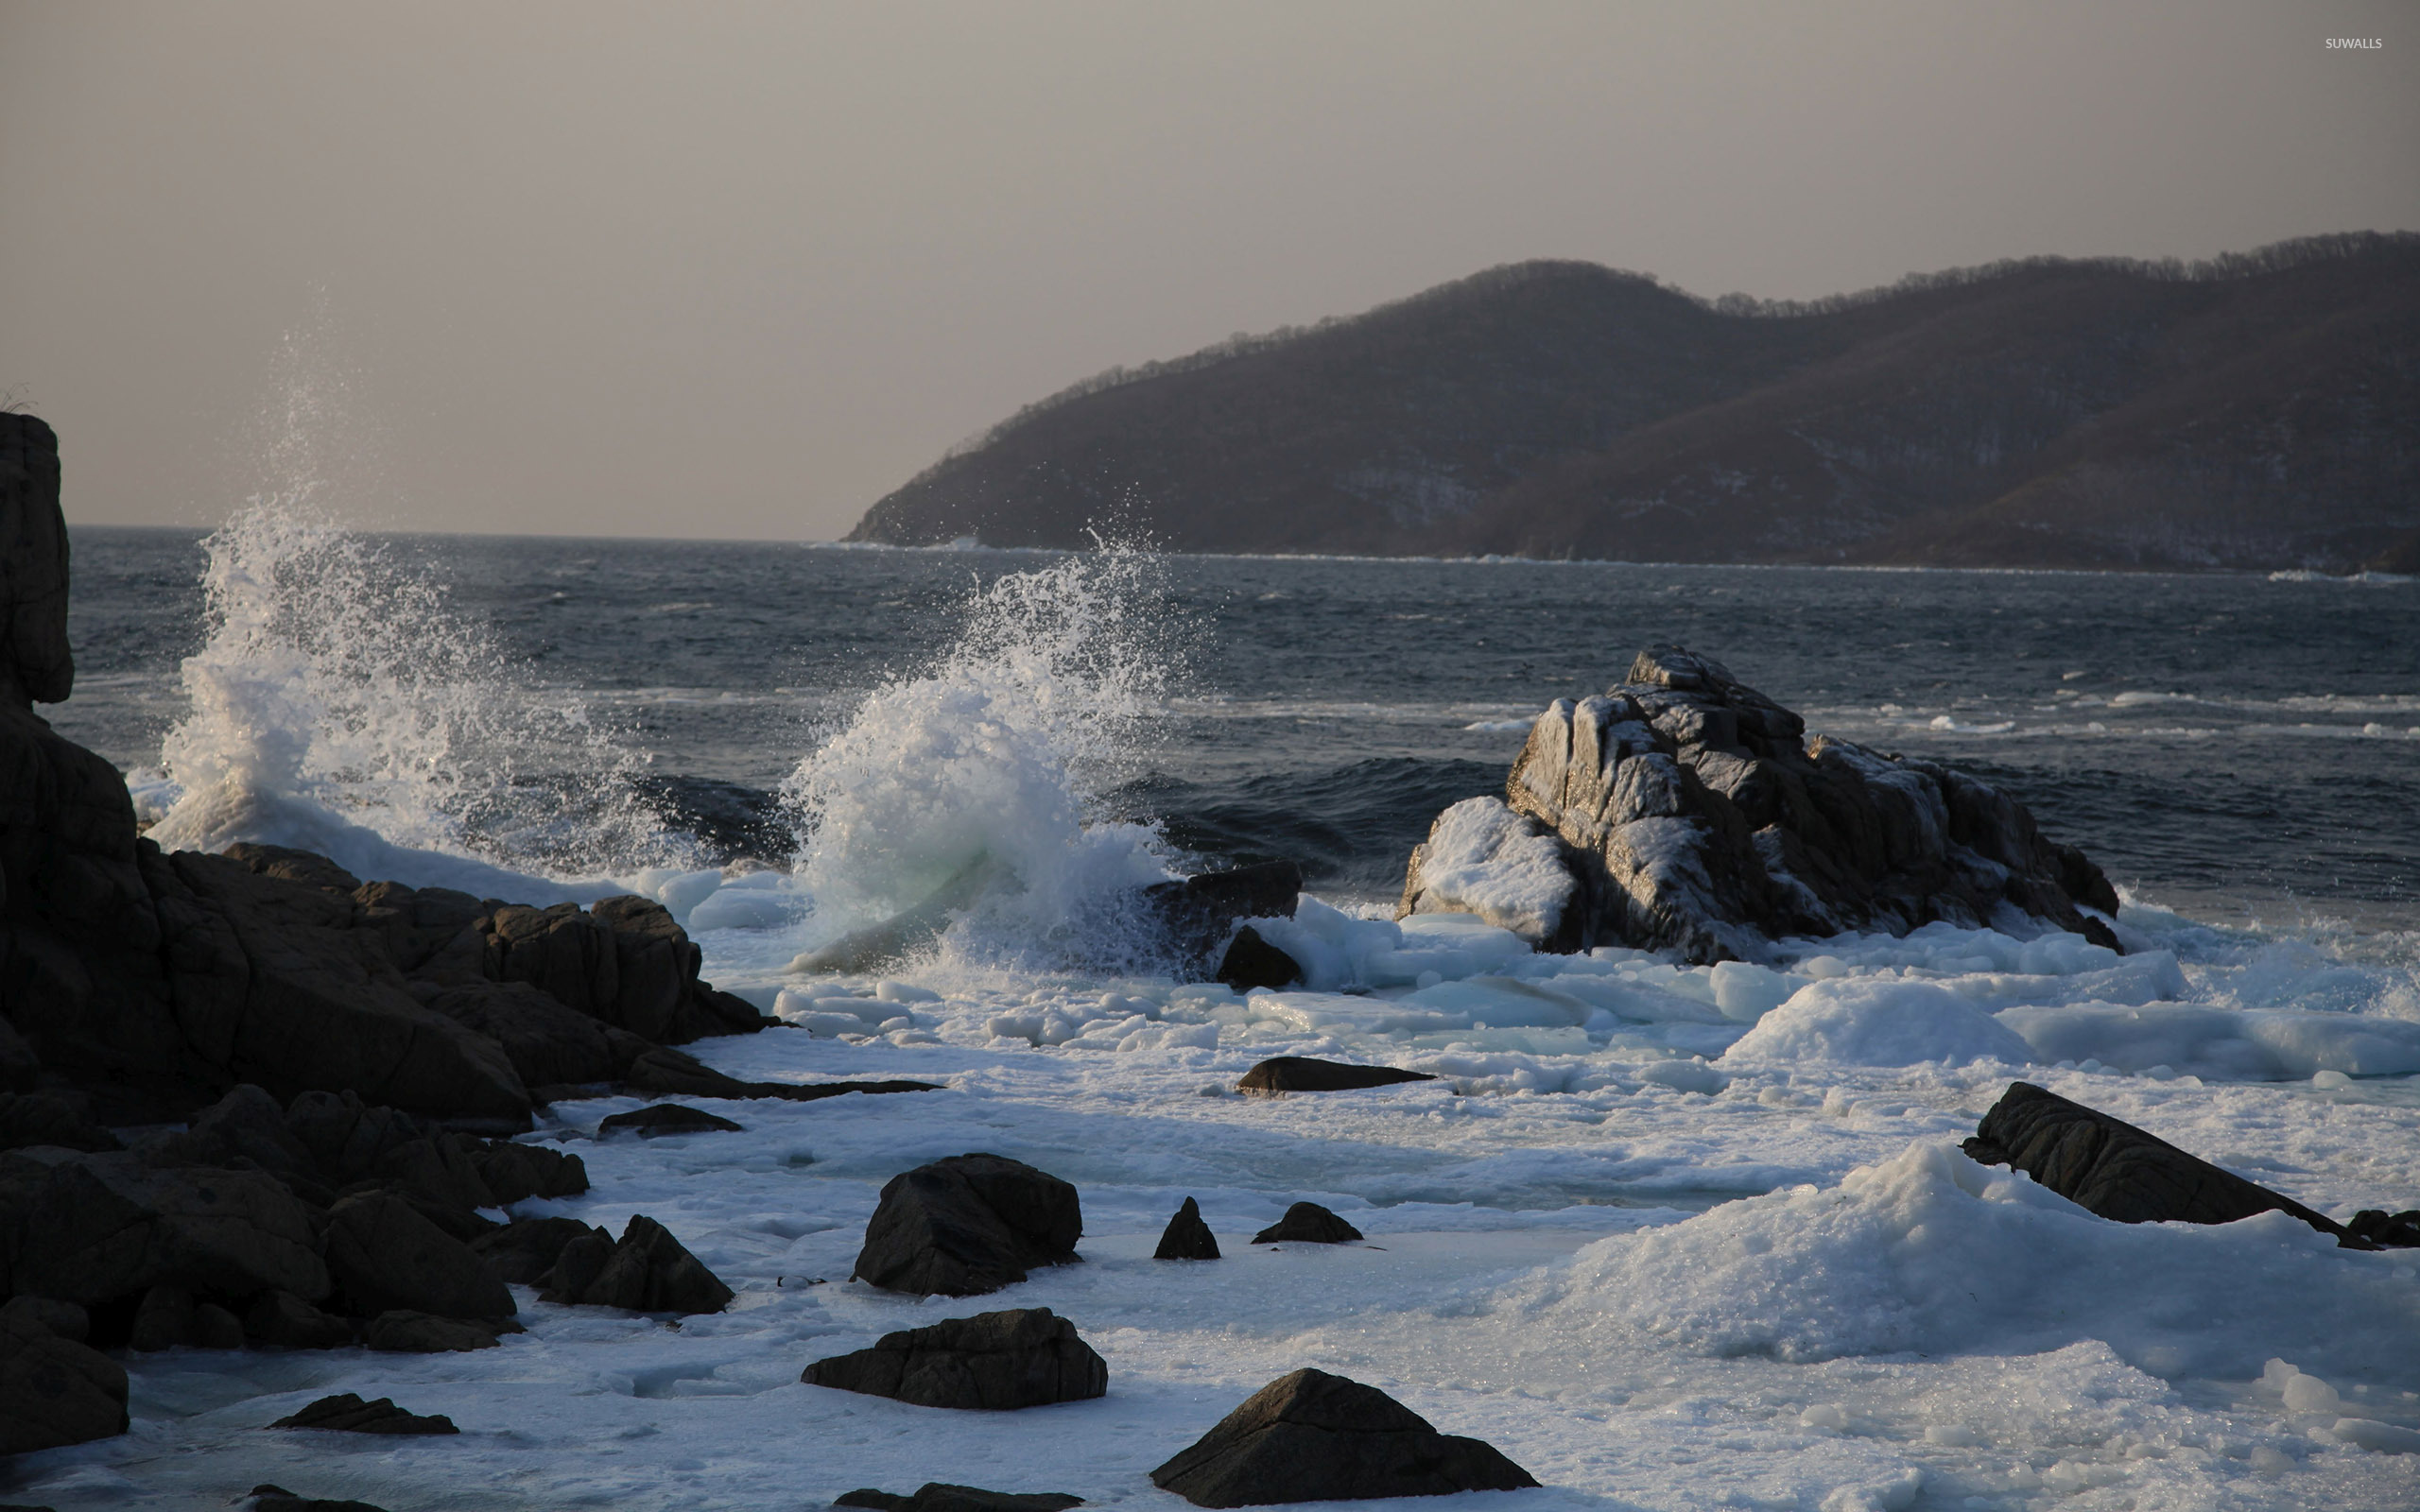 Waves splashing on the icy rocks wallpaper - Beach wallpapers - #37703